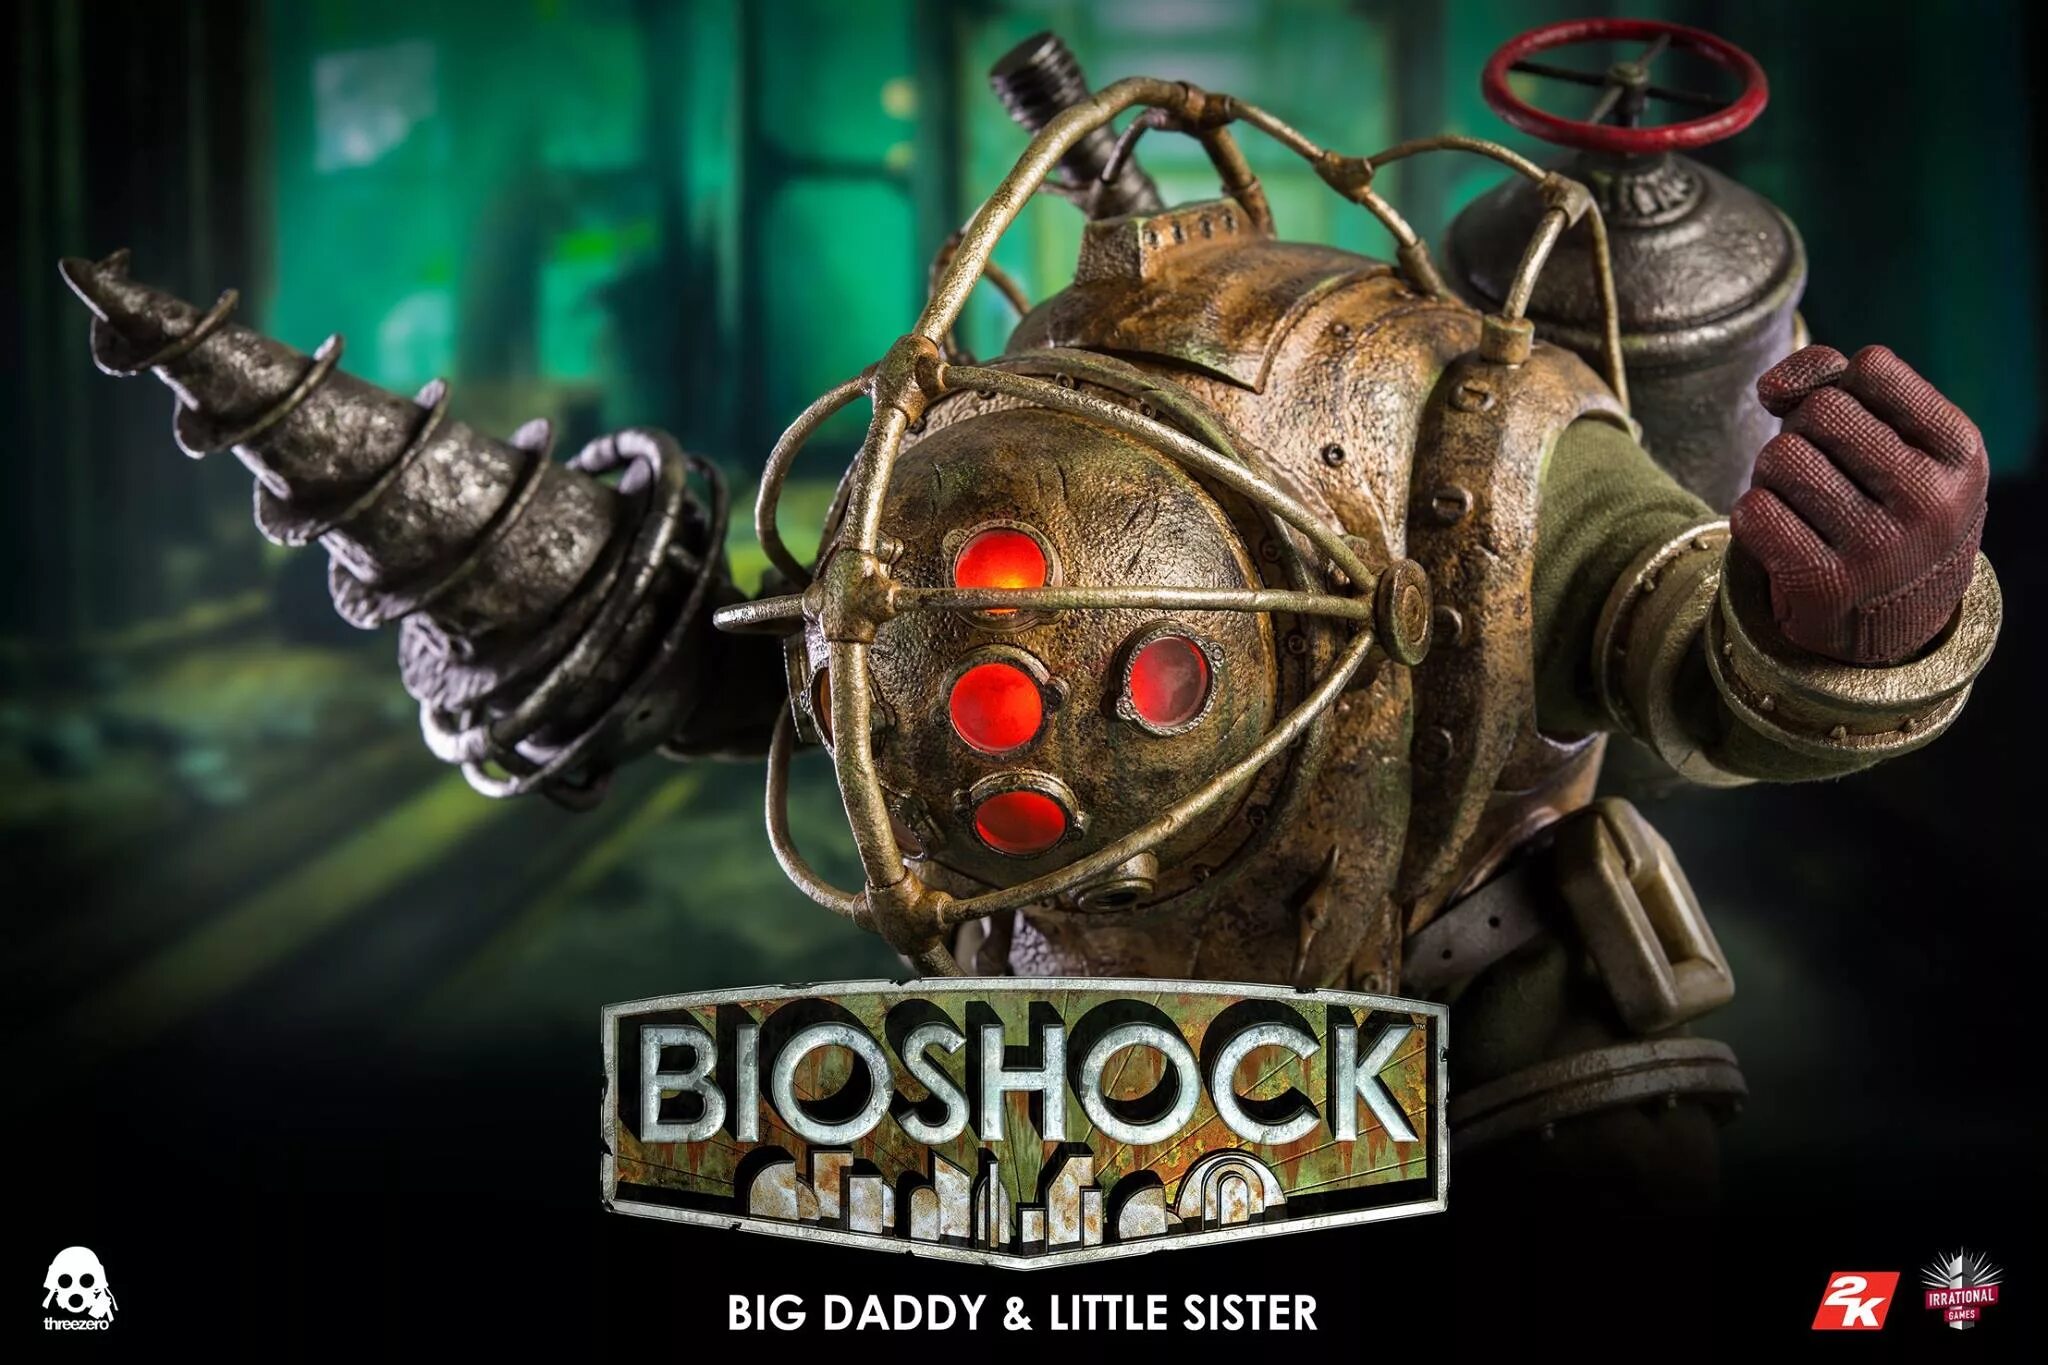 Bioshock daddy. Большой папочка Bioshock фигурка. Bioshock 1 big Daddy. Bioshock 2 big Daddy. Биошок 2 большой папочка.